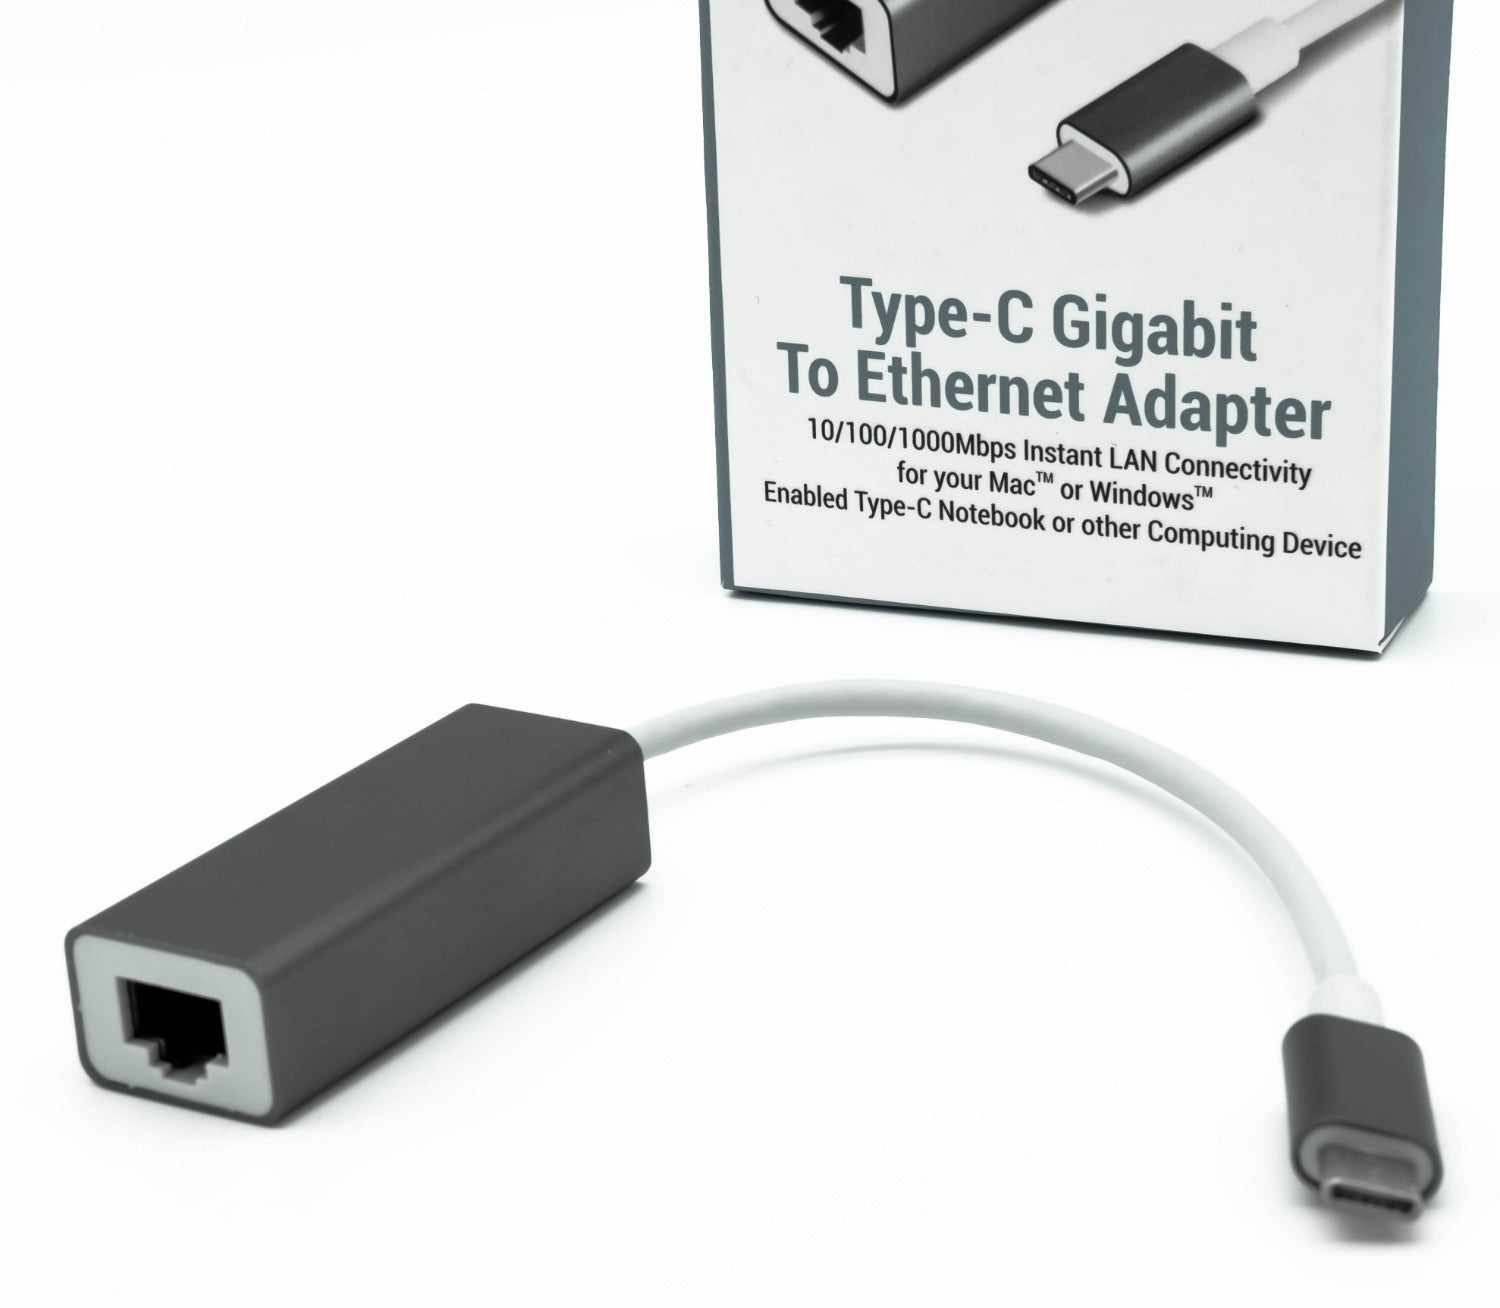 Gigabit LAN adapter for Type-C devices